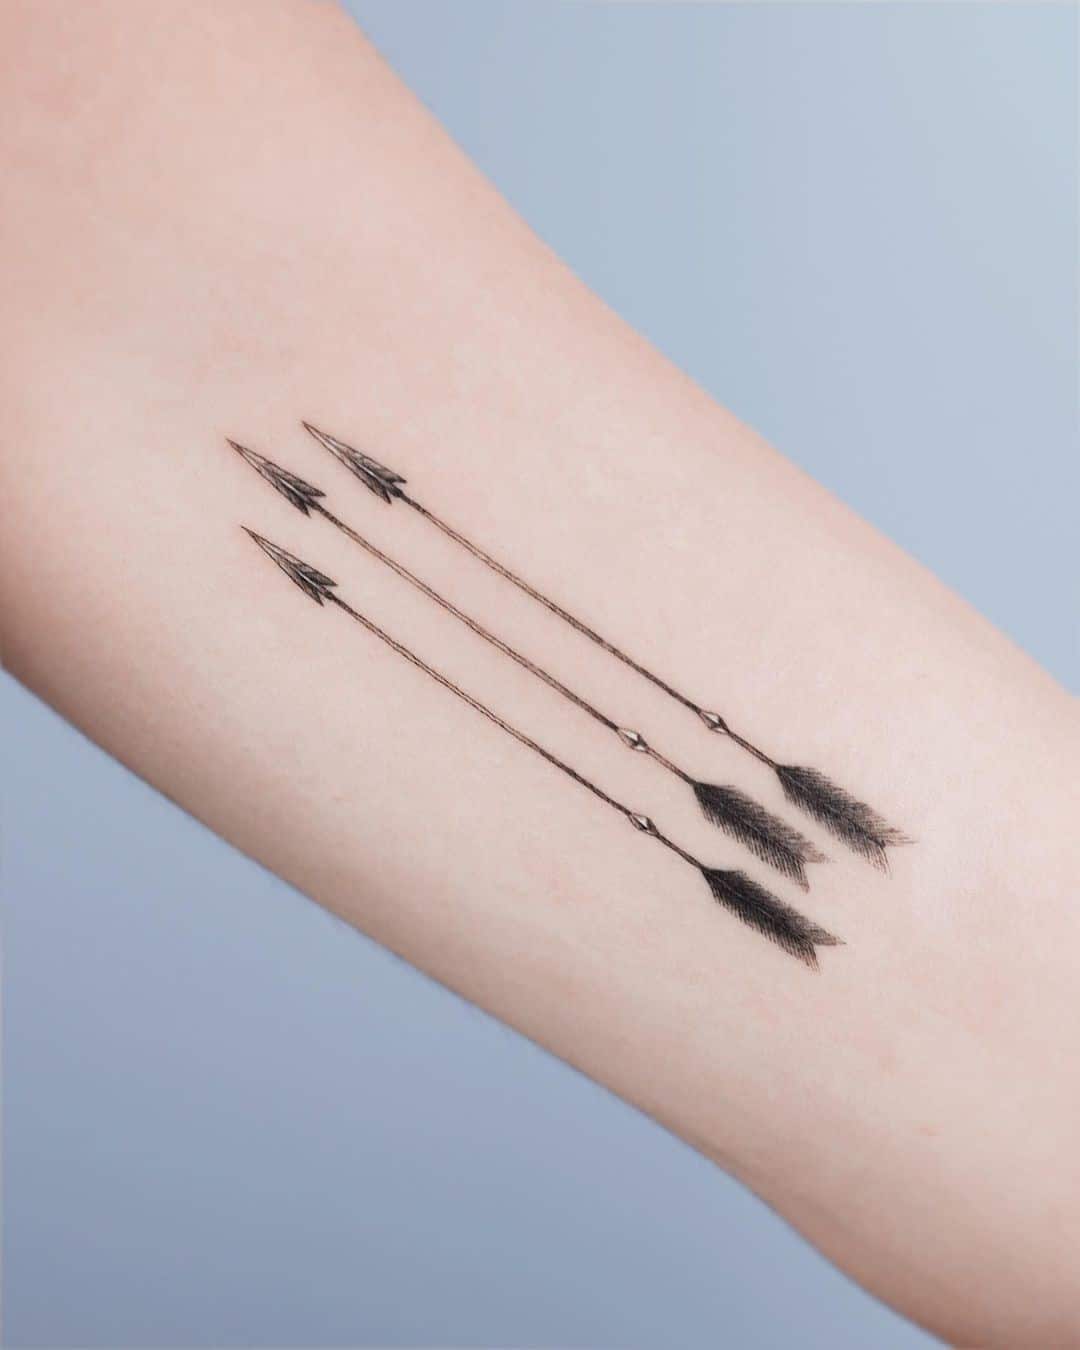 Really powerful arrow tattoo ideas not to miss